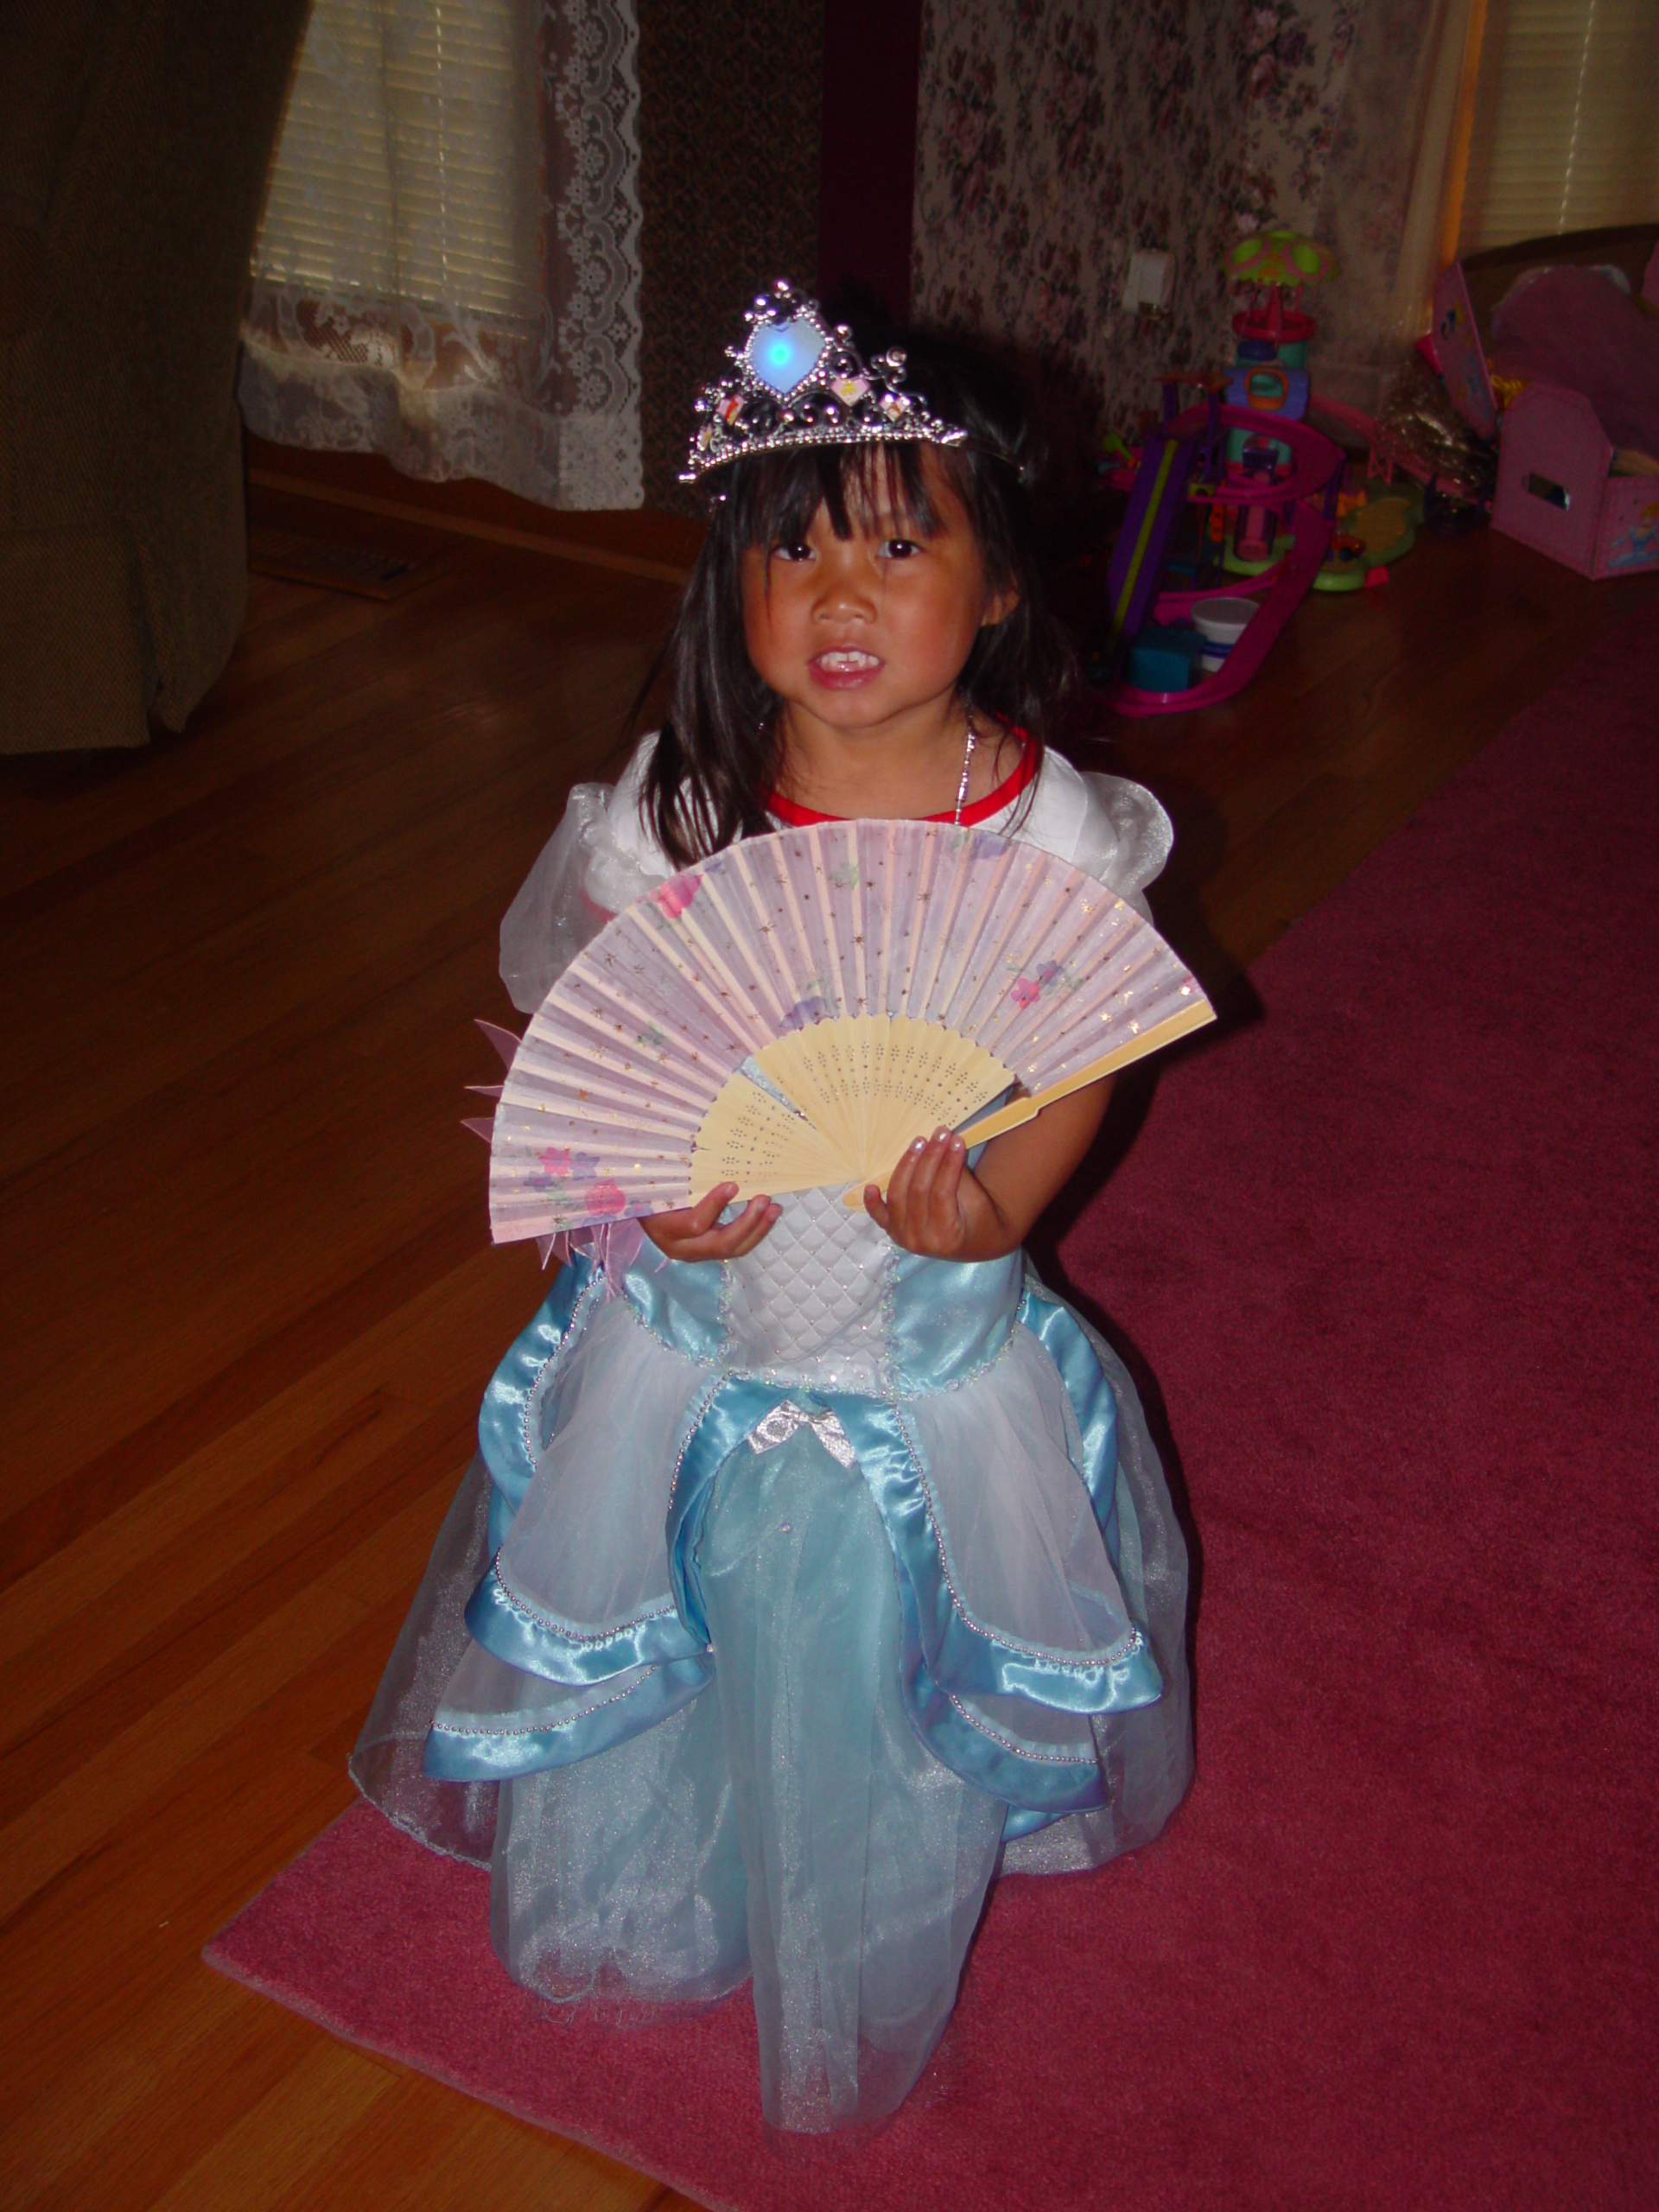 Kasen dressed as a Dancing Princess